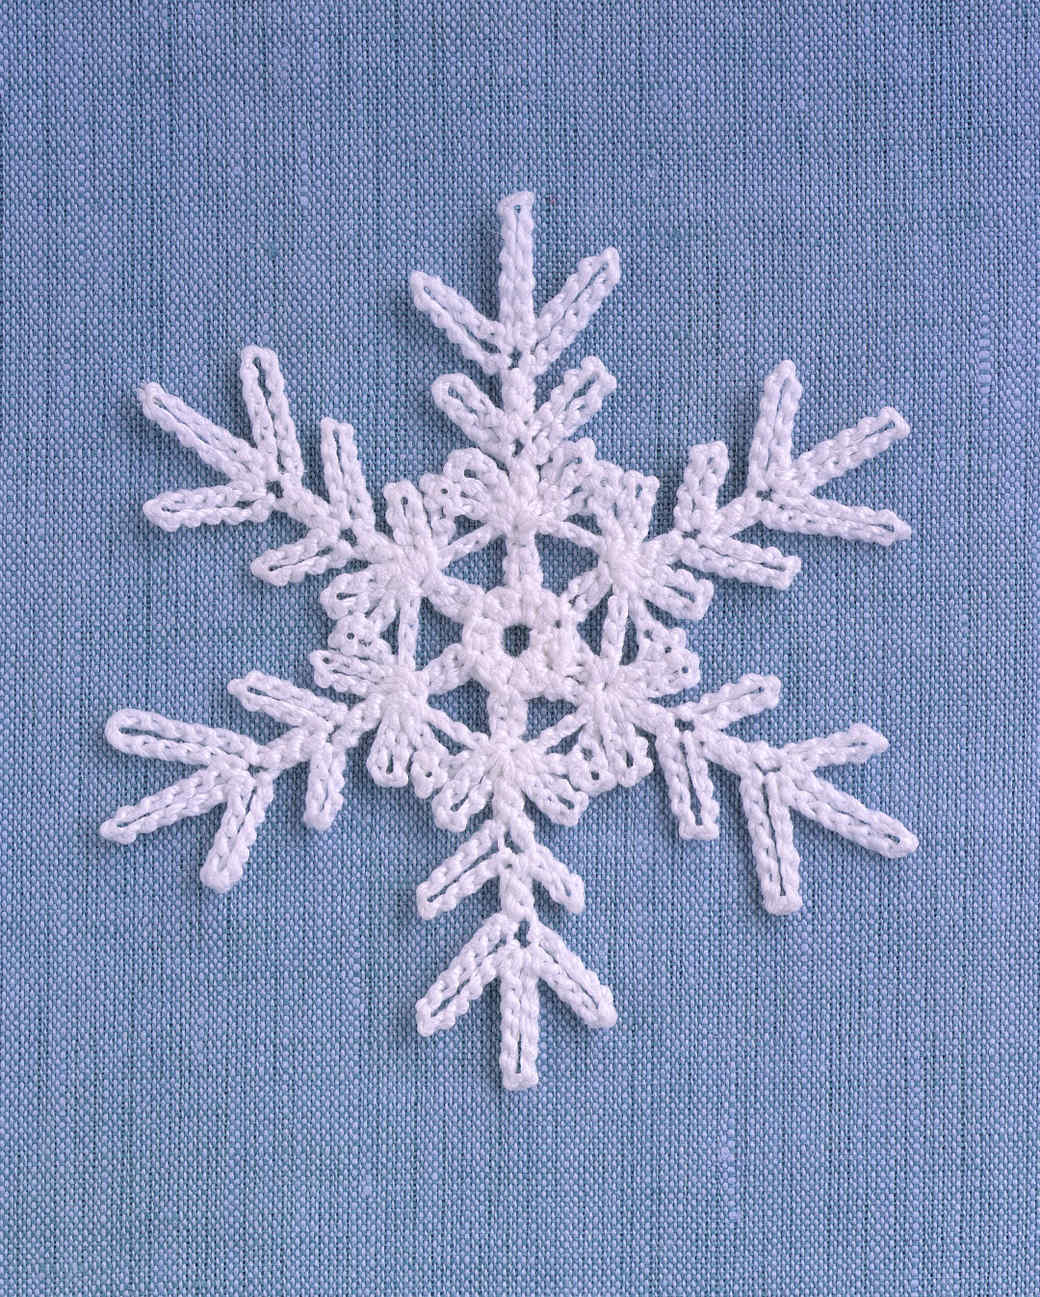 33-crochet-snowflake-patterns-guide-patterns